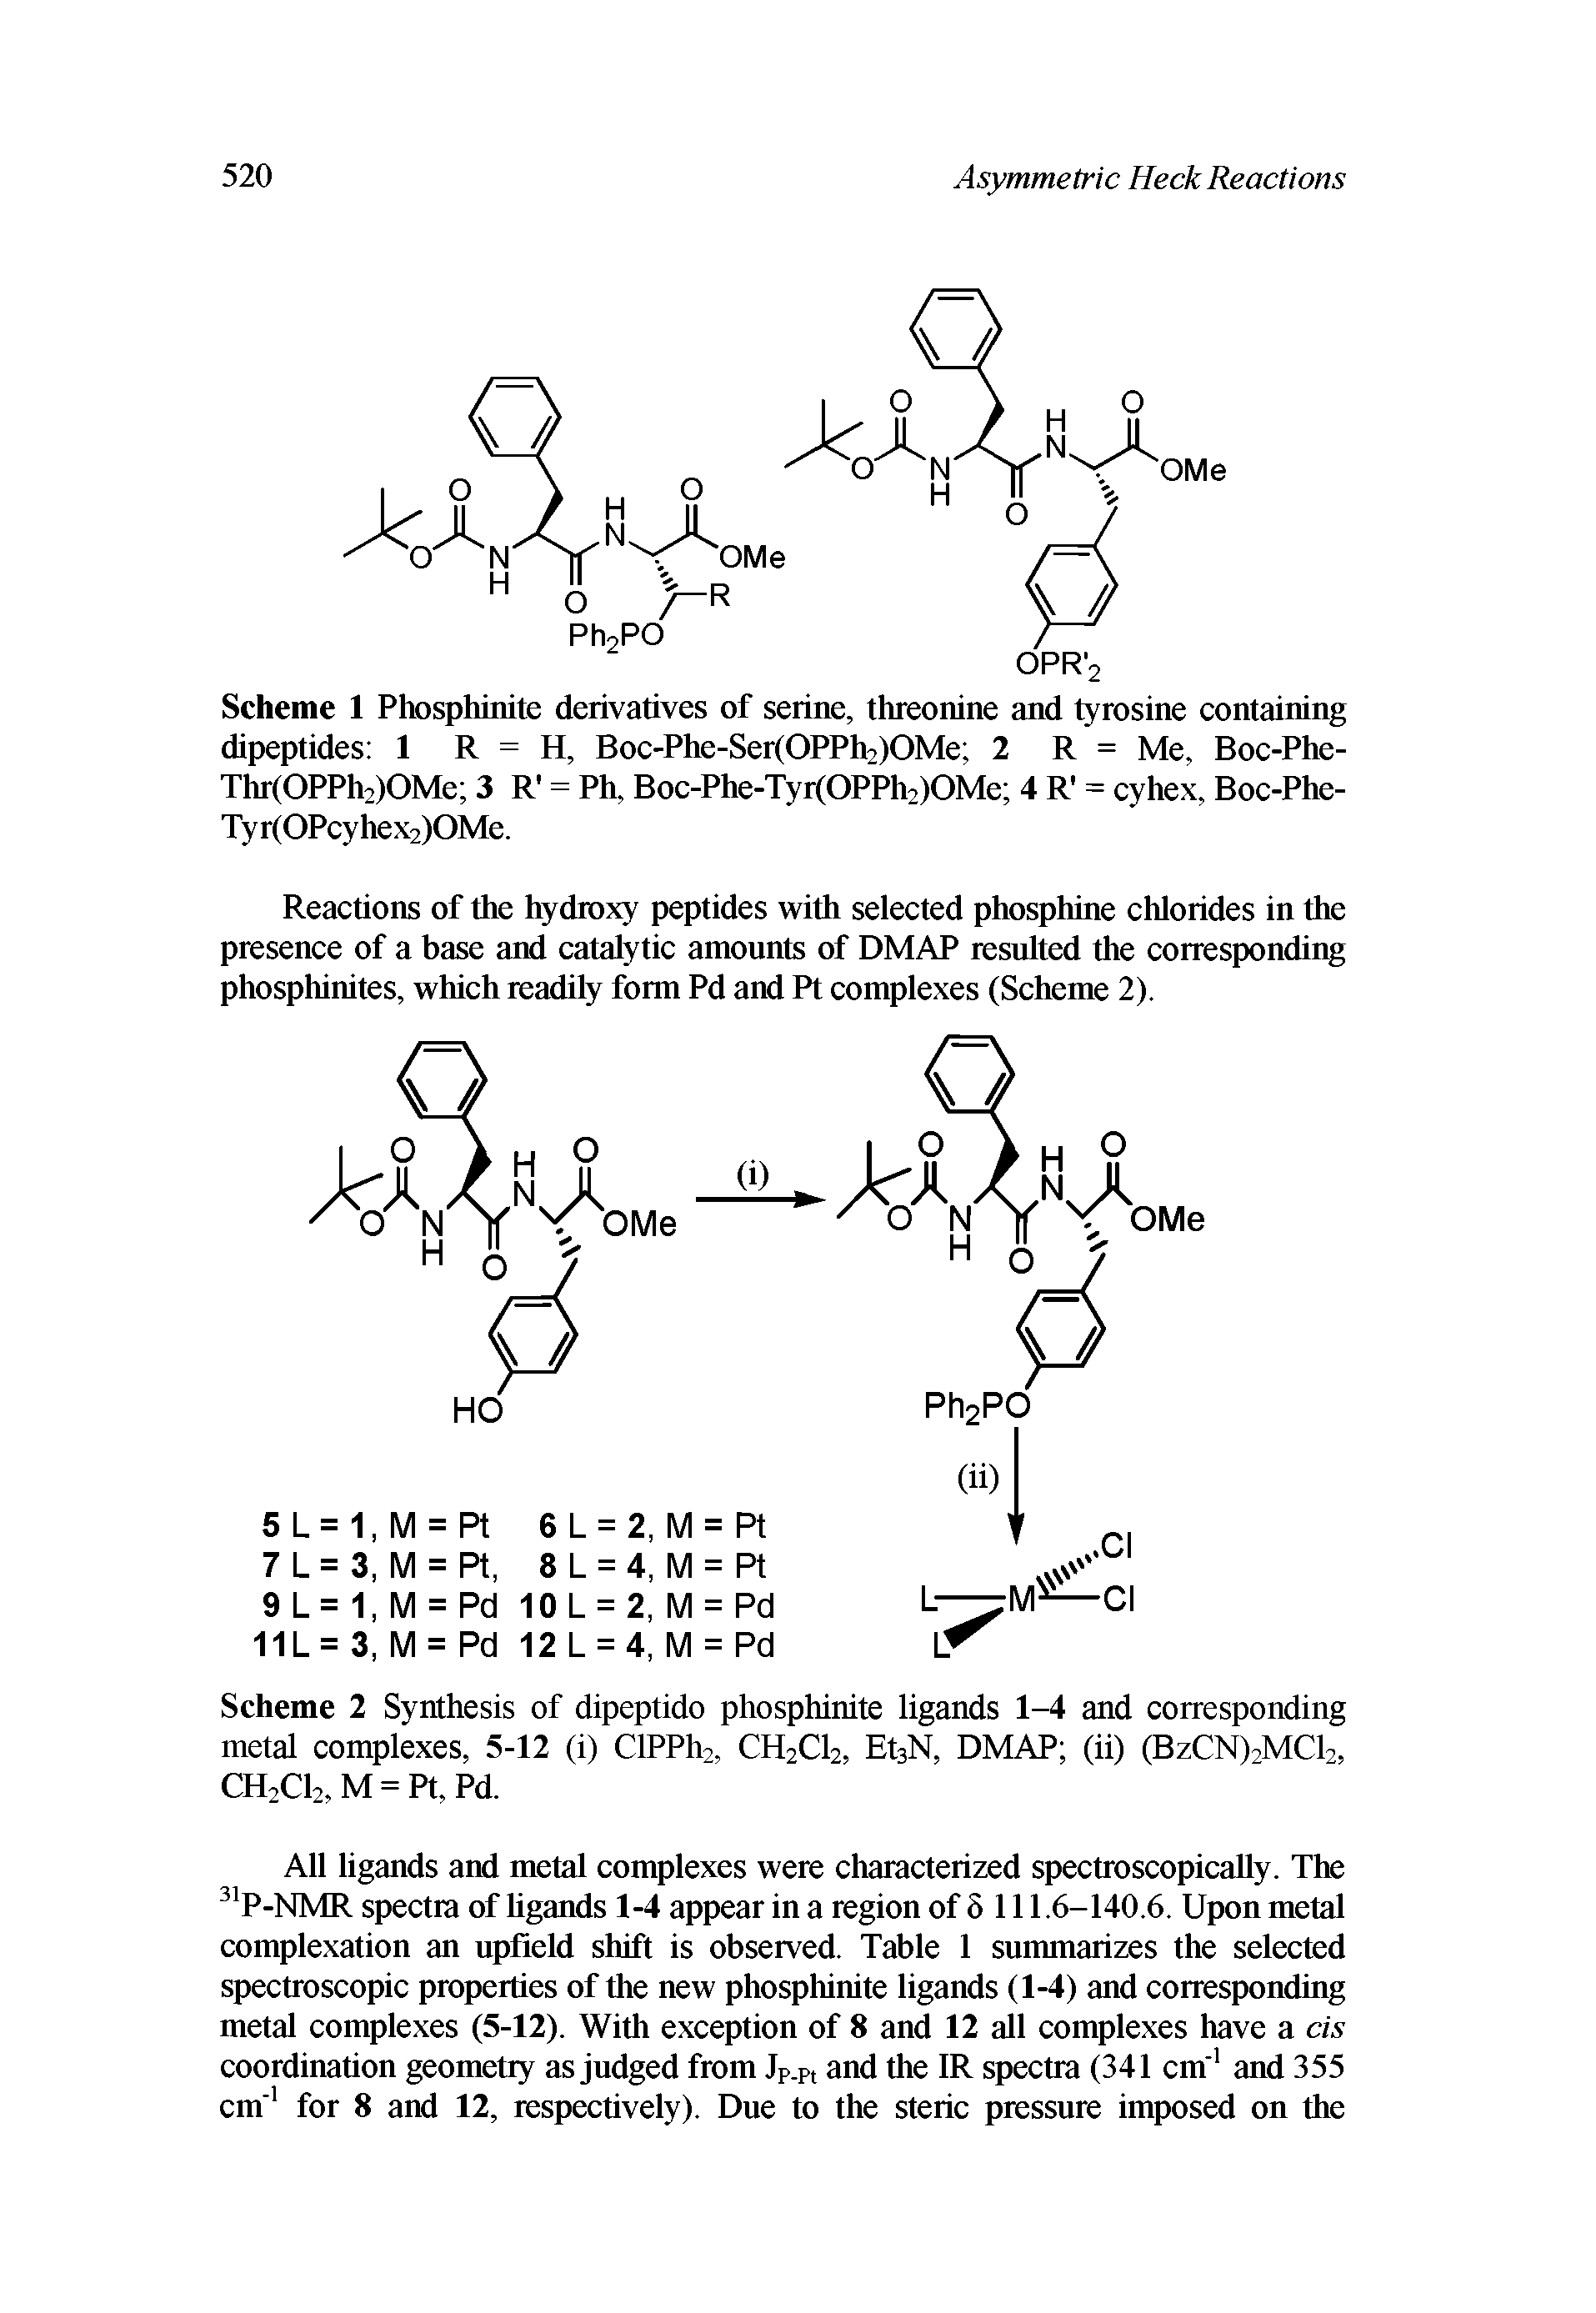 Scheme 1 Phosphinite derivatives of serine, threonine and tyrosine containing dipeptides 1 R = H, Boc-Phe-Ser(OPPh2)OMe 2 R = Me, Boc-Phe-Thr(OPPh2)OMe 3 R = Ph, Boc-Phe-Tyr(OPPh2)OMe 4R = cyhex, Boc-Phe-Tyr(OPcyhex2)OMe.